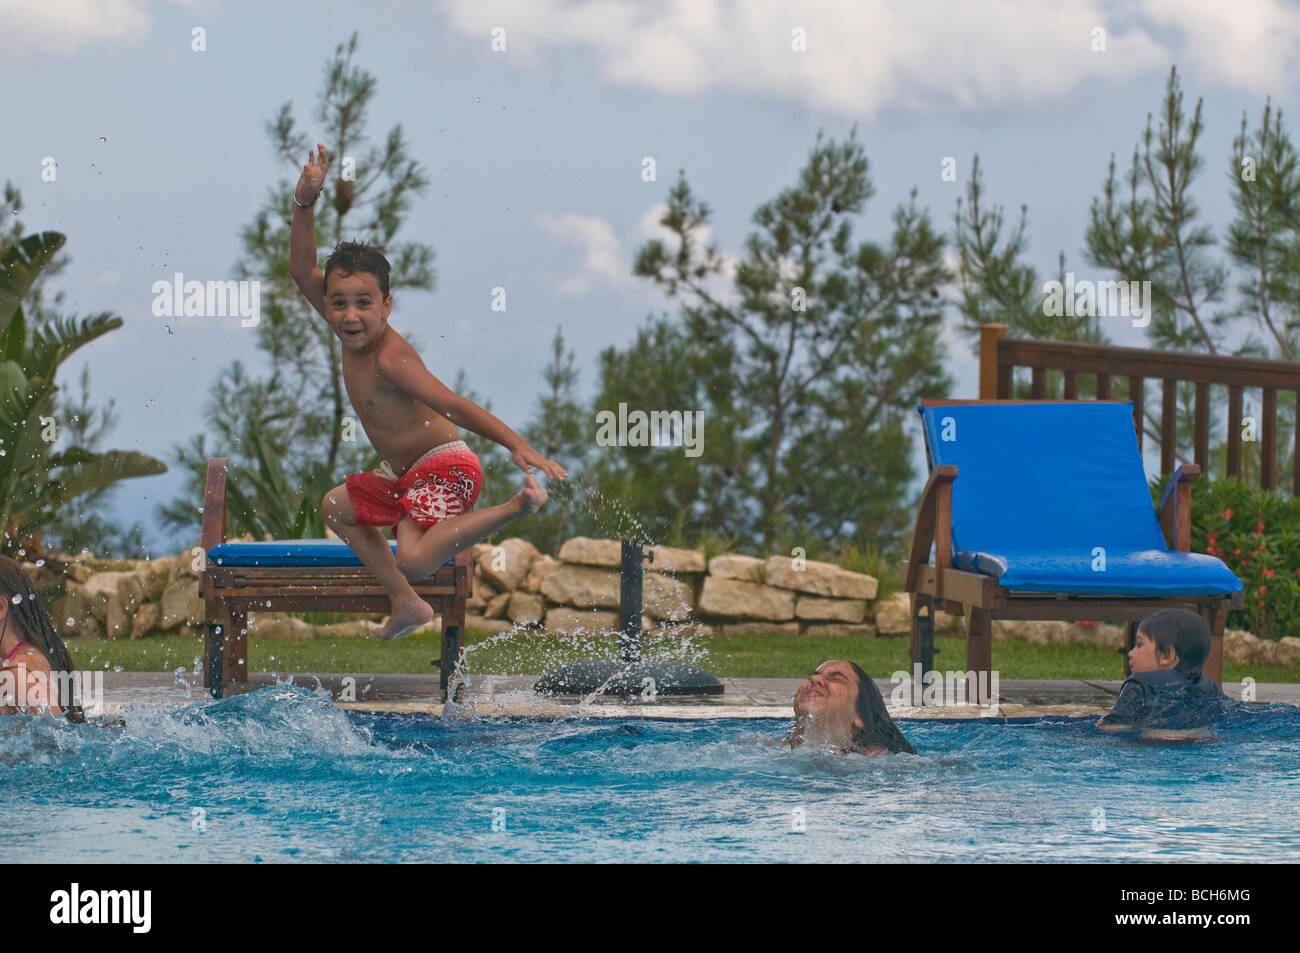 Children having fun in the sun - poolside joy in Cyprus Stock Photo